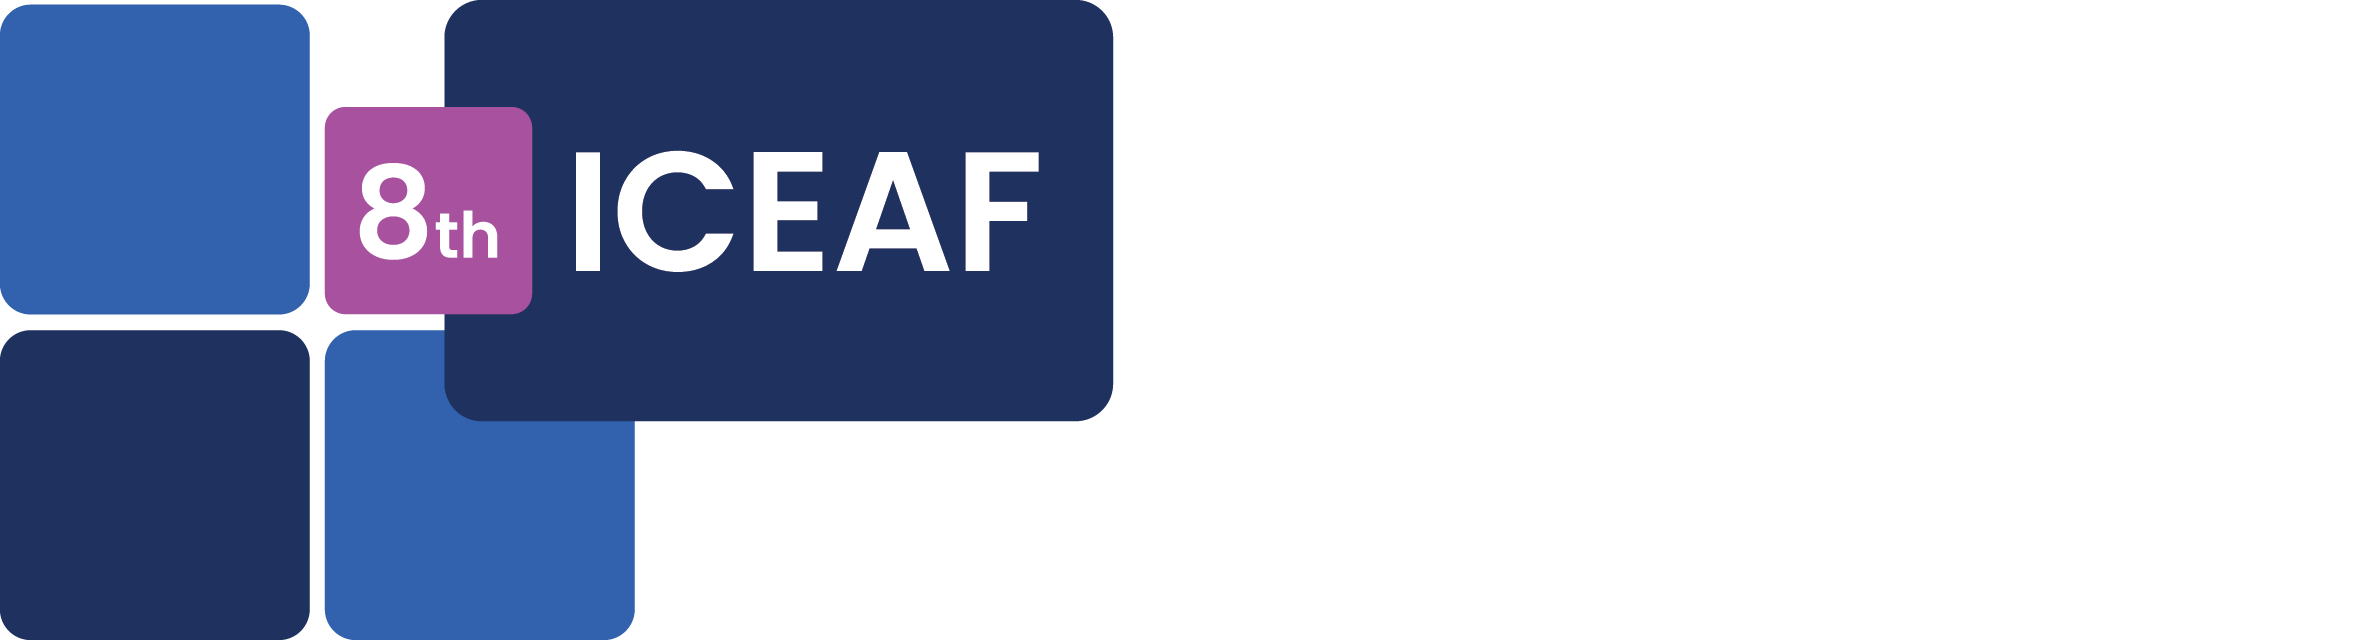 ICEAF VIII logo